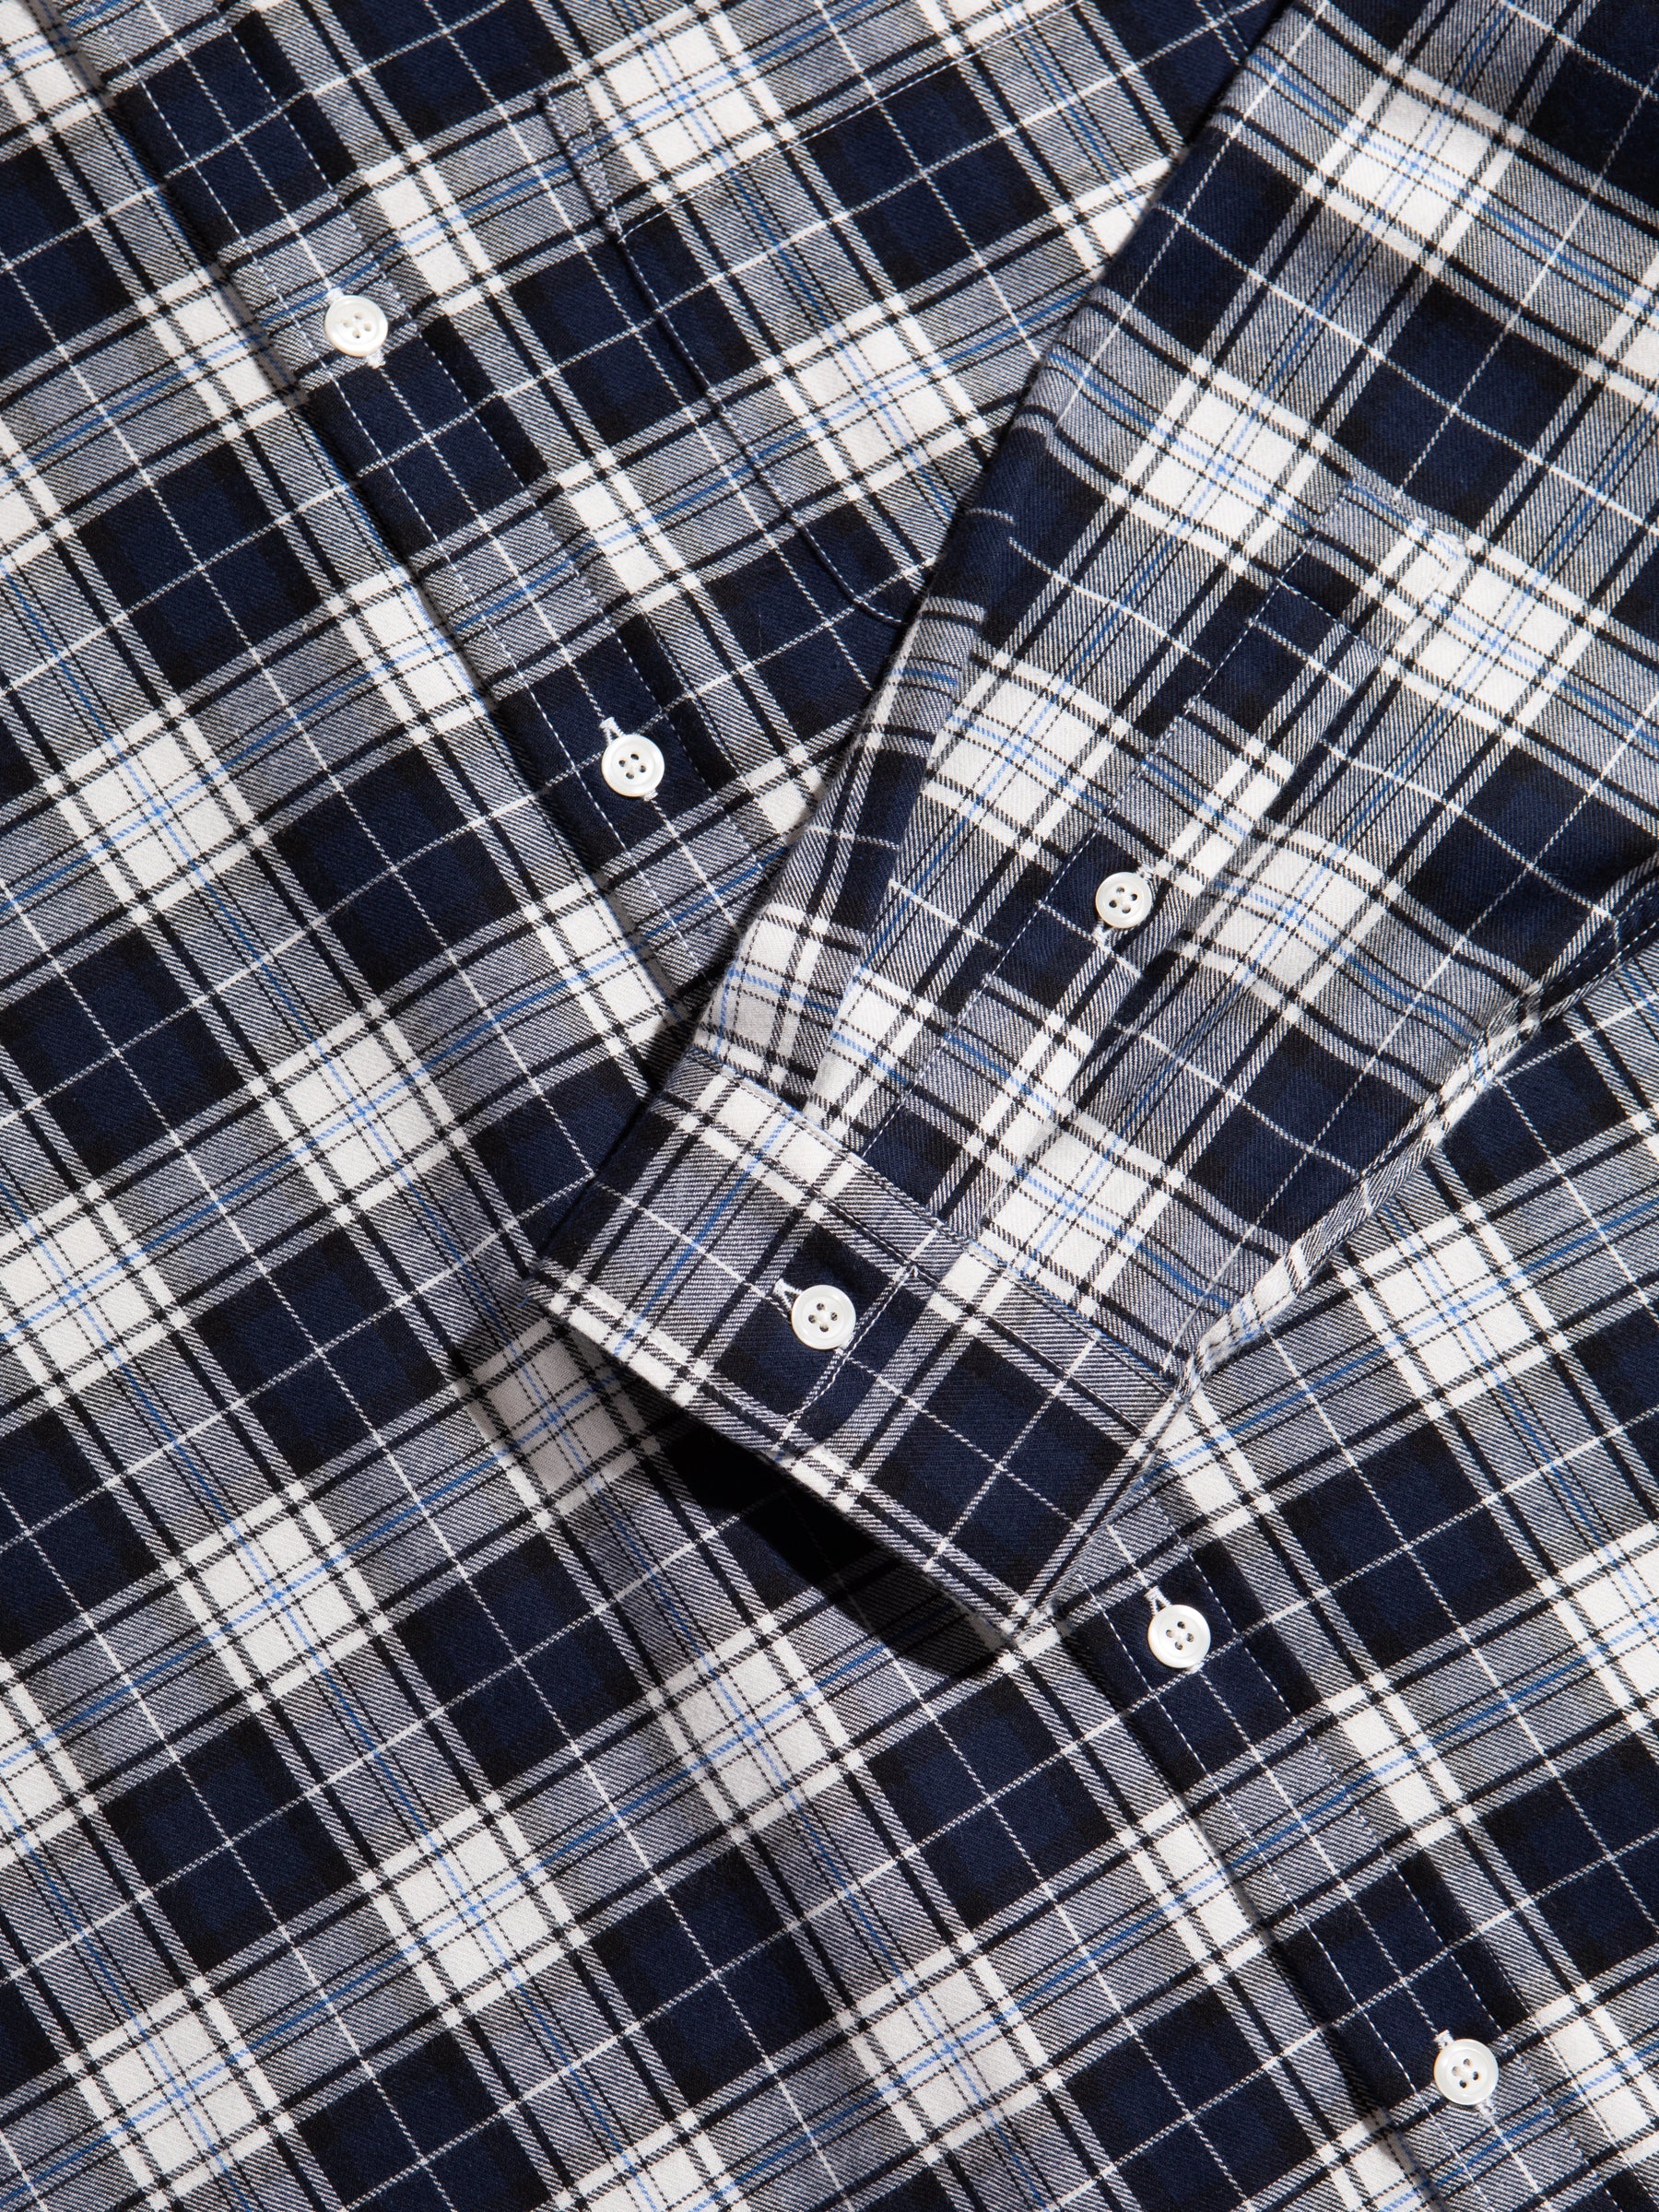 A check flannel shirt by British menswear brand KESTIN.